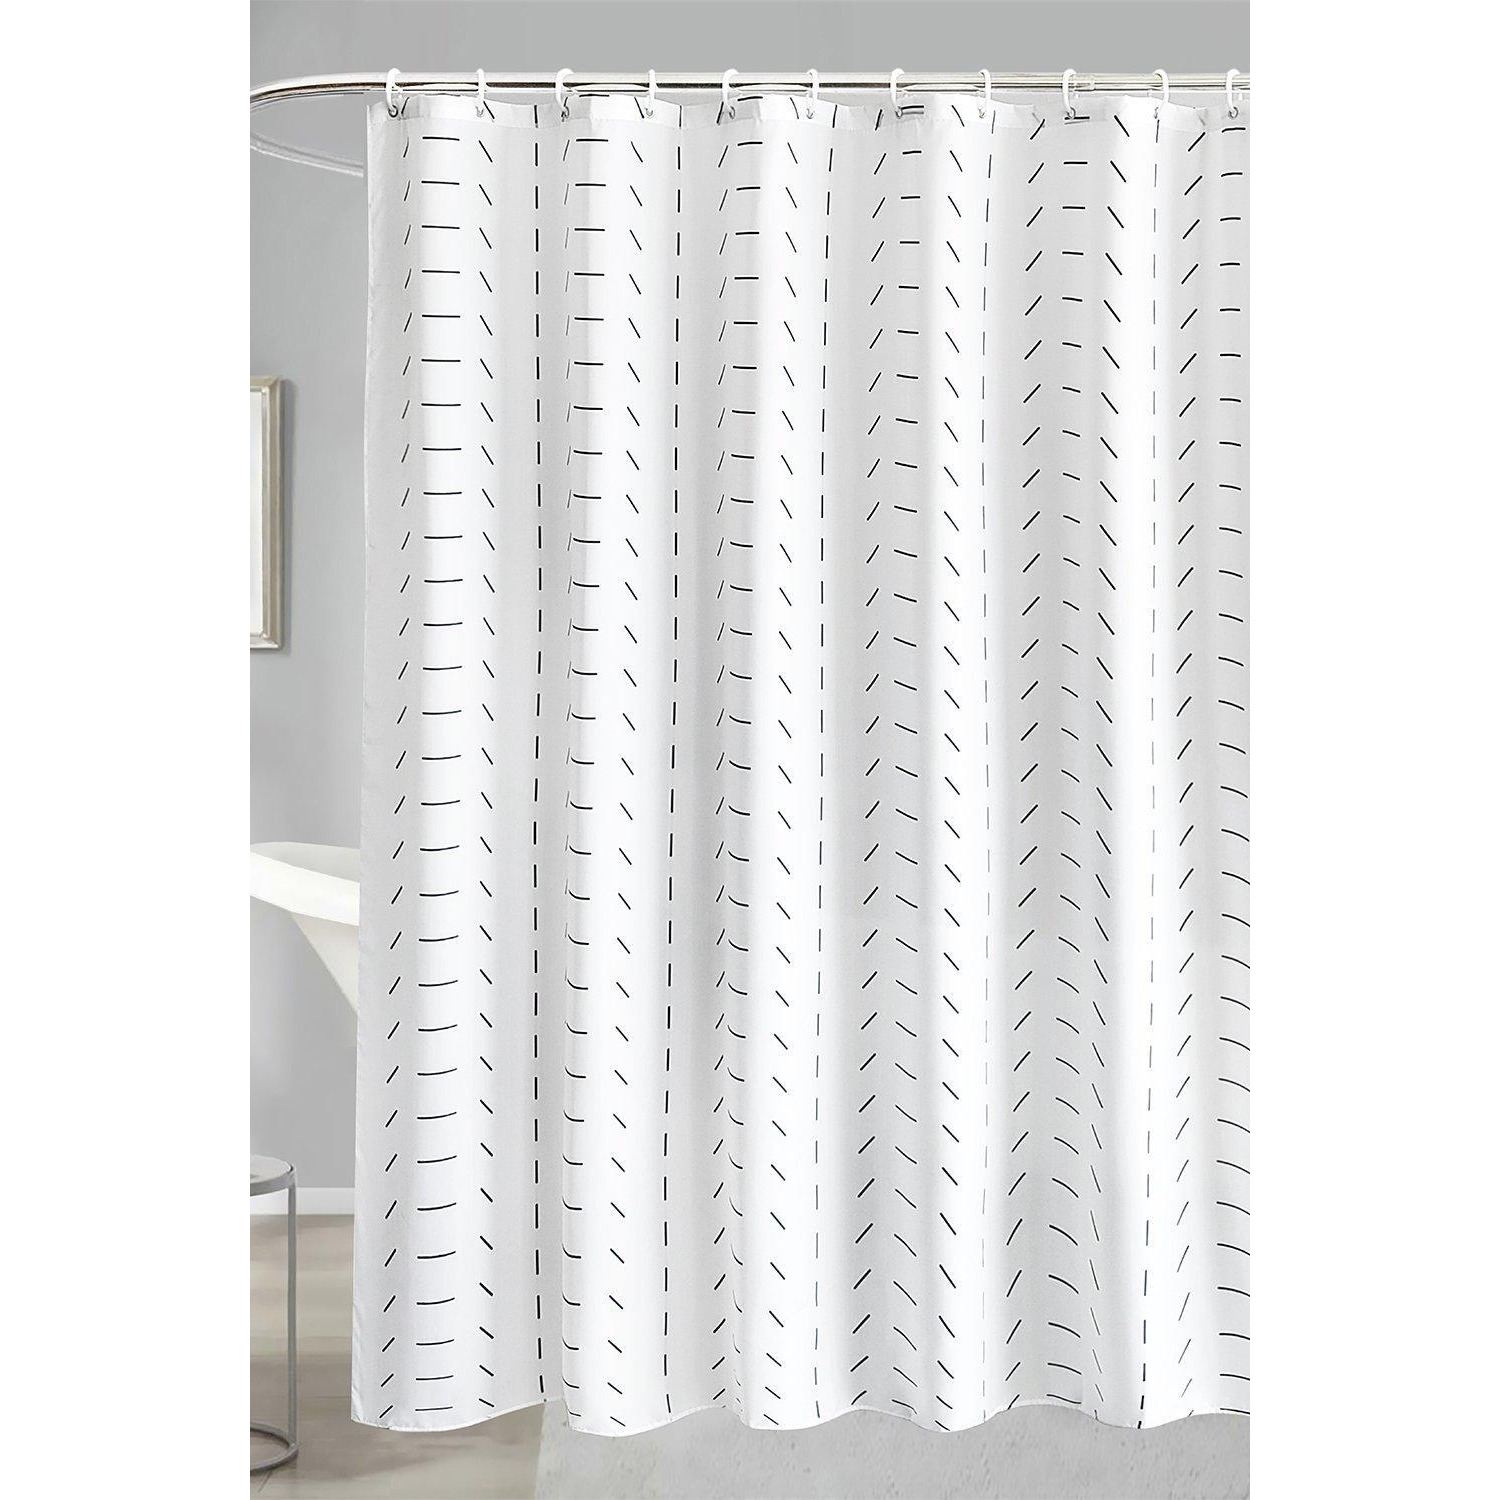 Simple Geometric Lines Printed Shower Curtain, Black & White - 180cm x 200cm - image 1